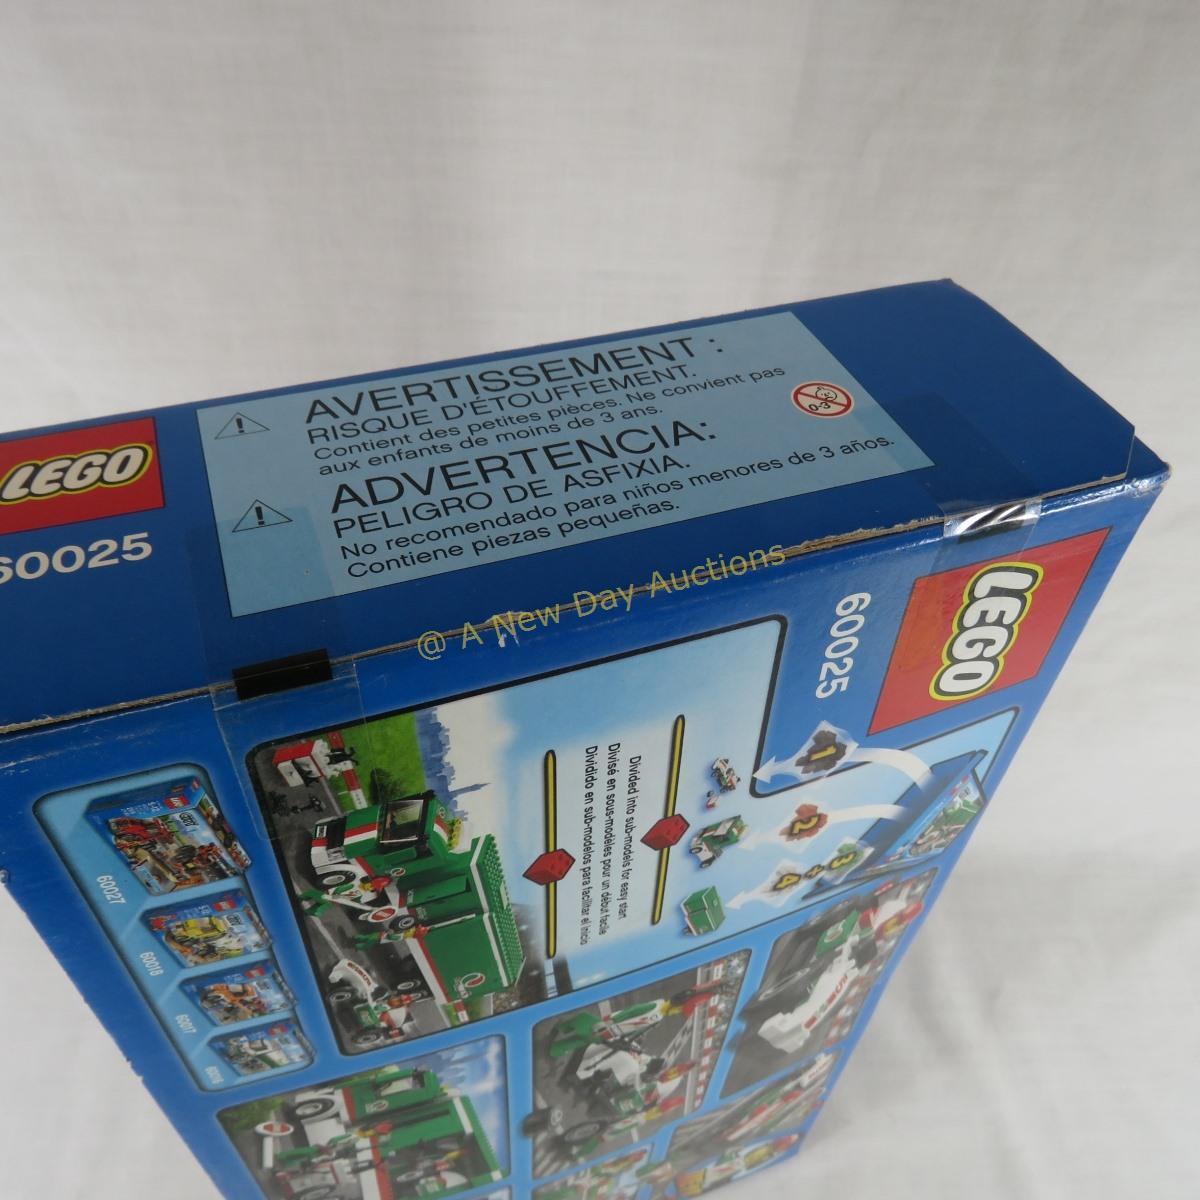 New Lego Set City Grand Prix Truck 60025